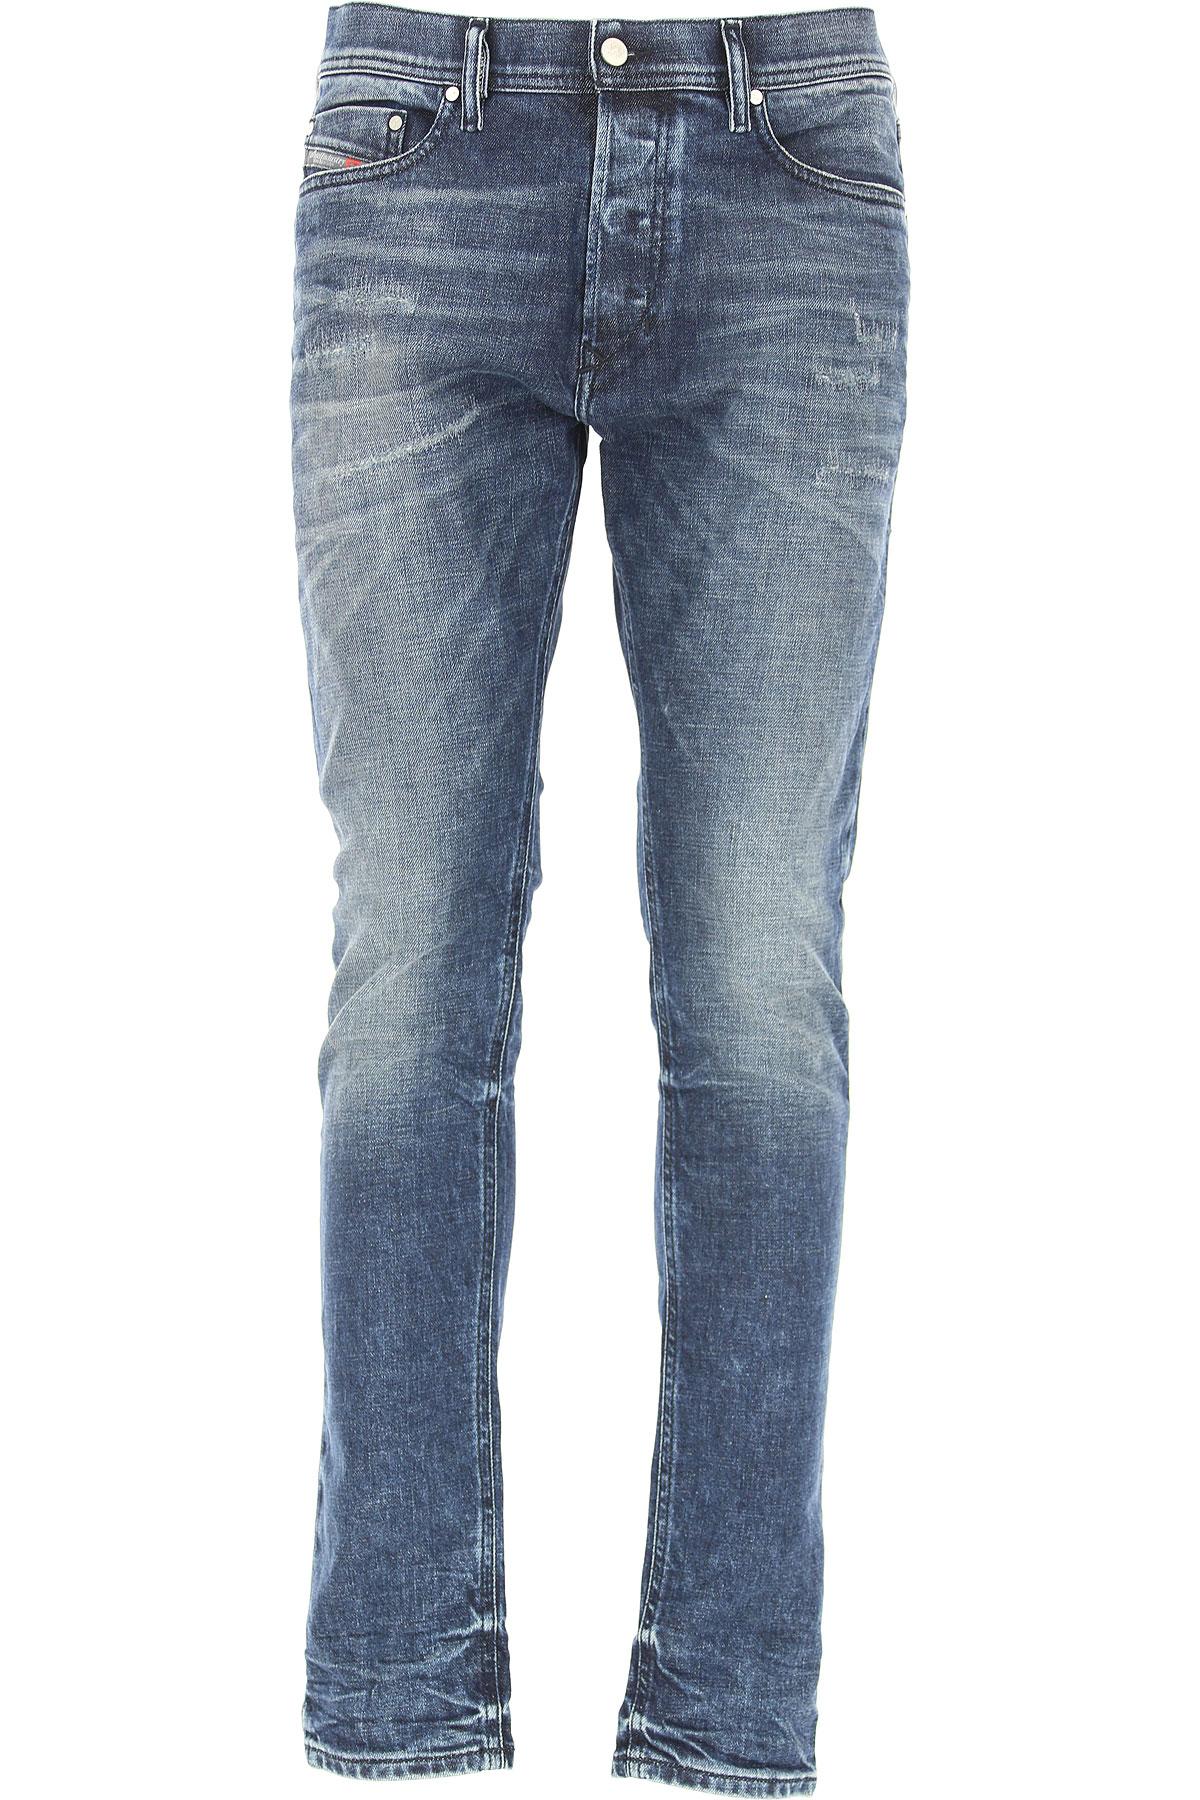 DIESEL Denim Jeans On Sale In Outlet in Blue for Men - Lyst